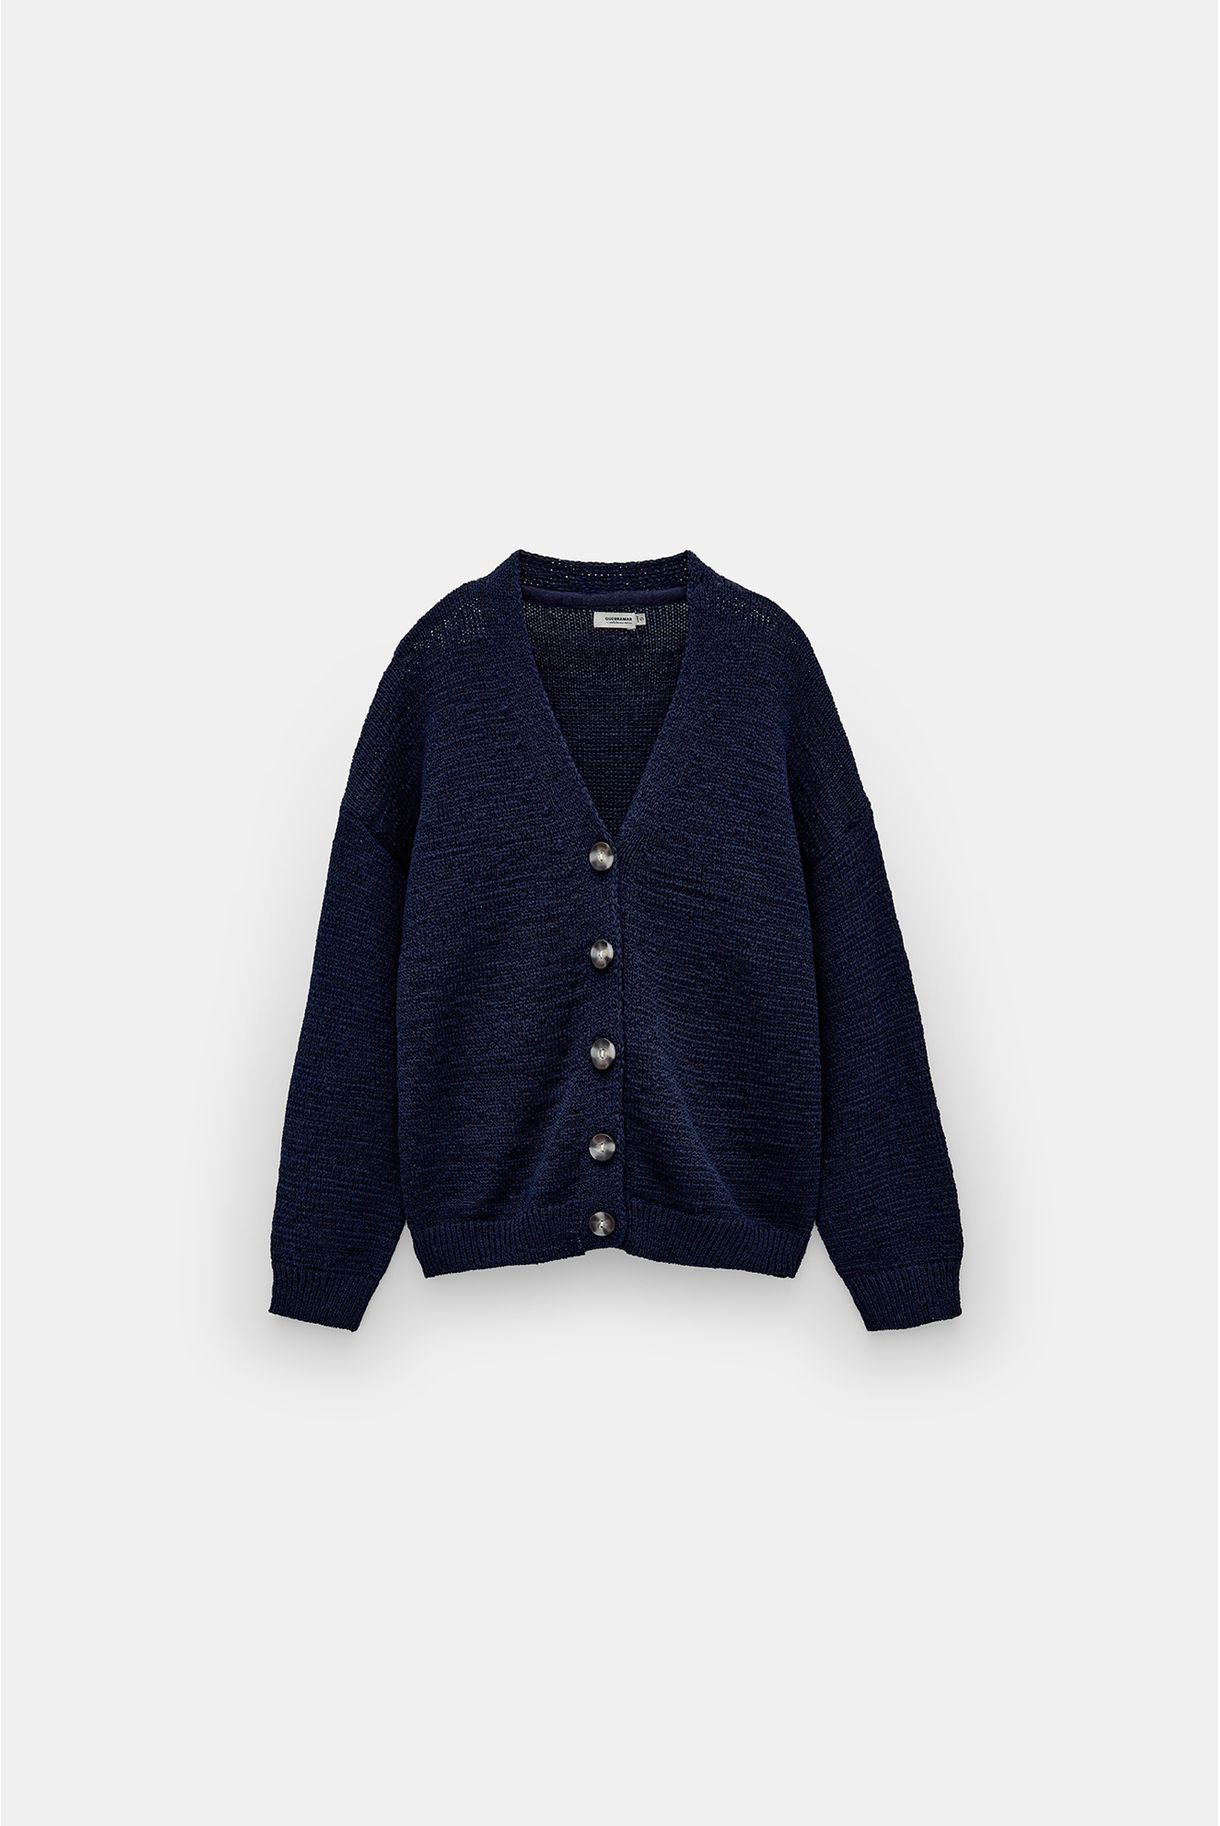 V-neck knit coat